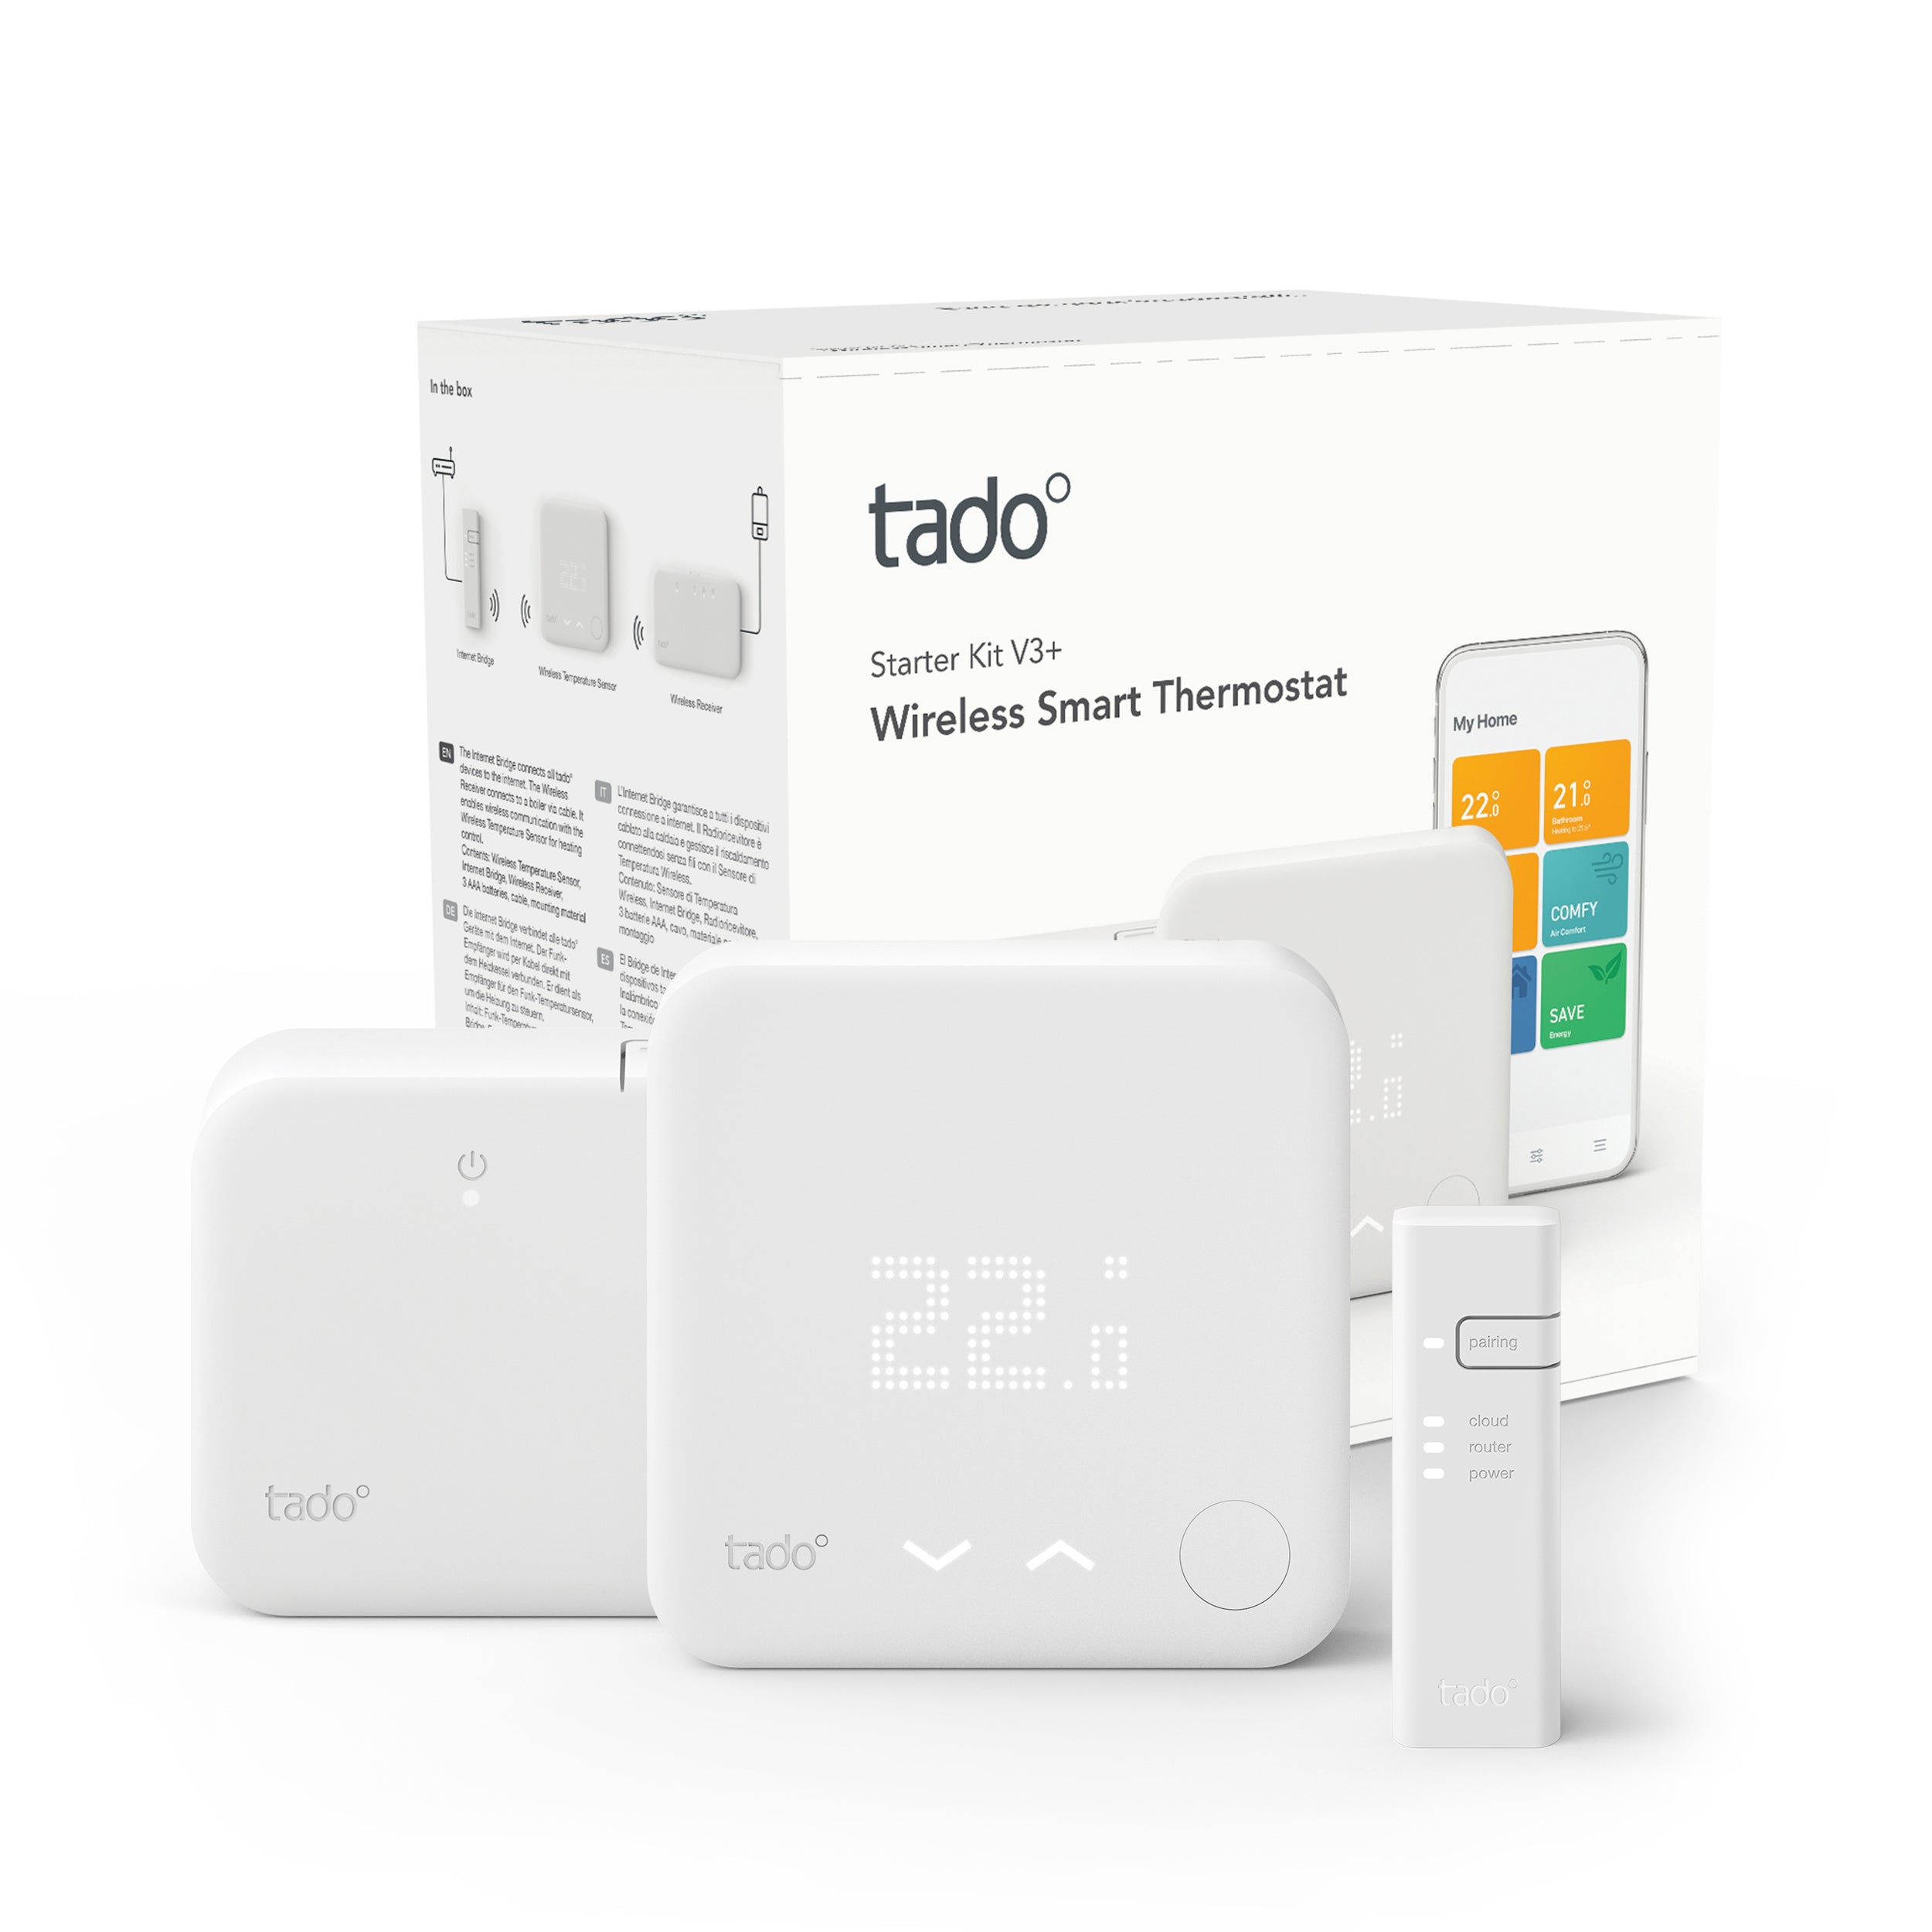 Kit de démarrage - Thermostat intelligent sans fil V3+